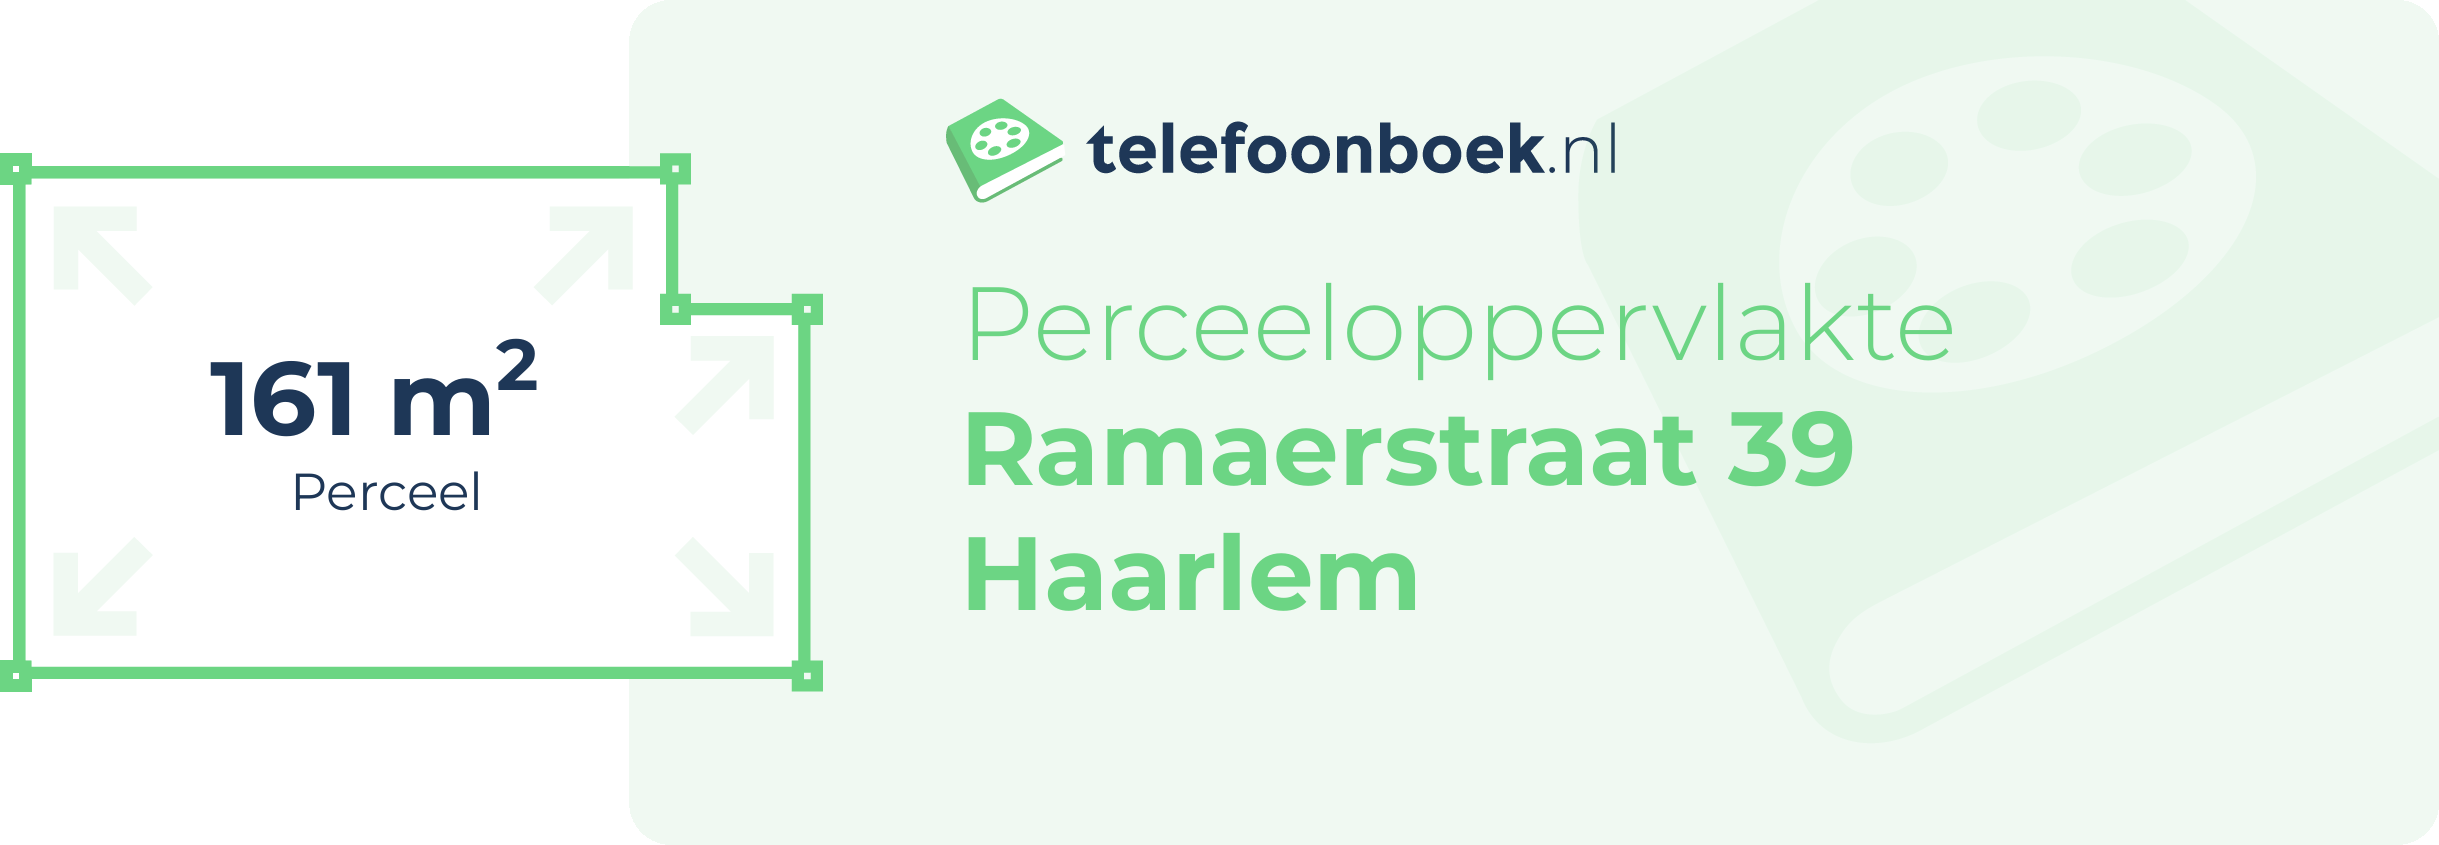 Perceeloppervlakte Ramaerstraat 39 Haarlem